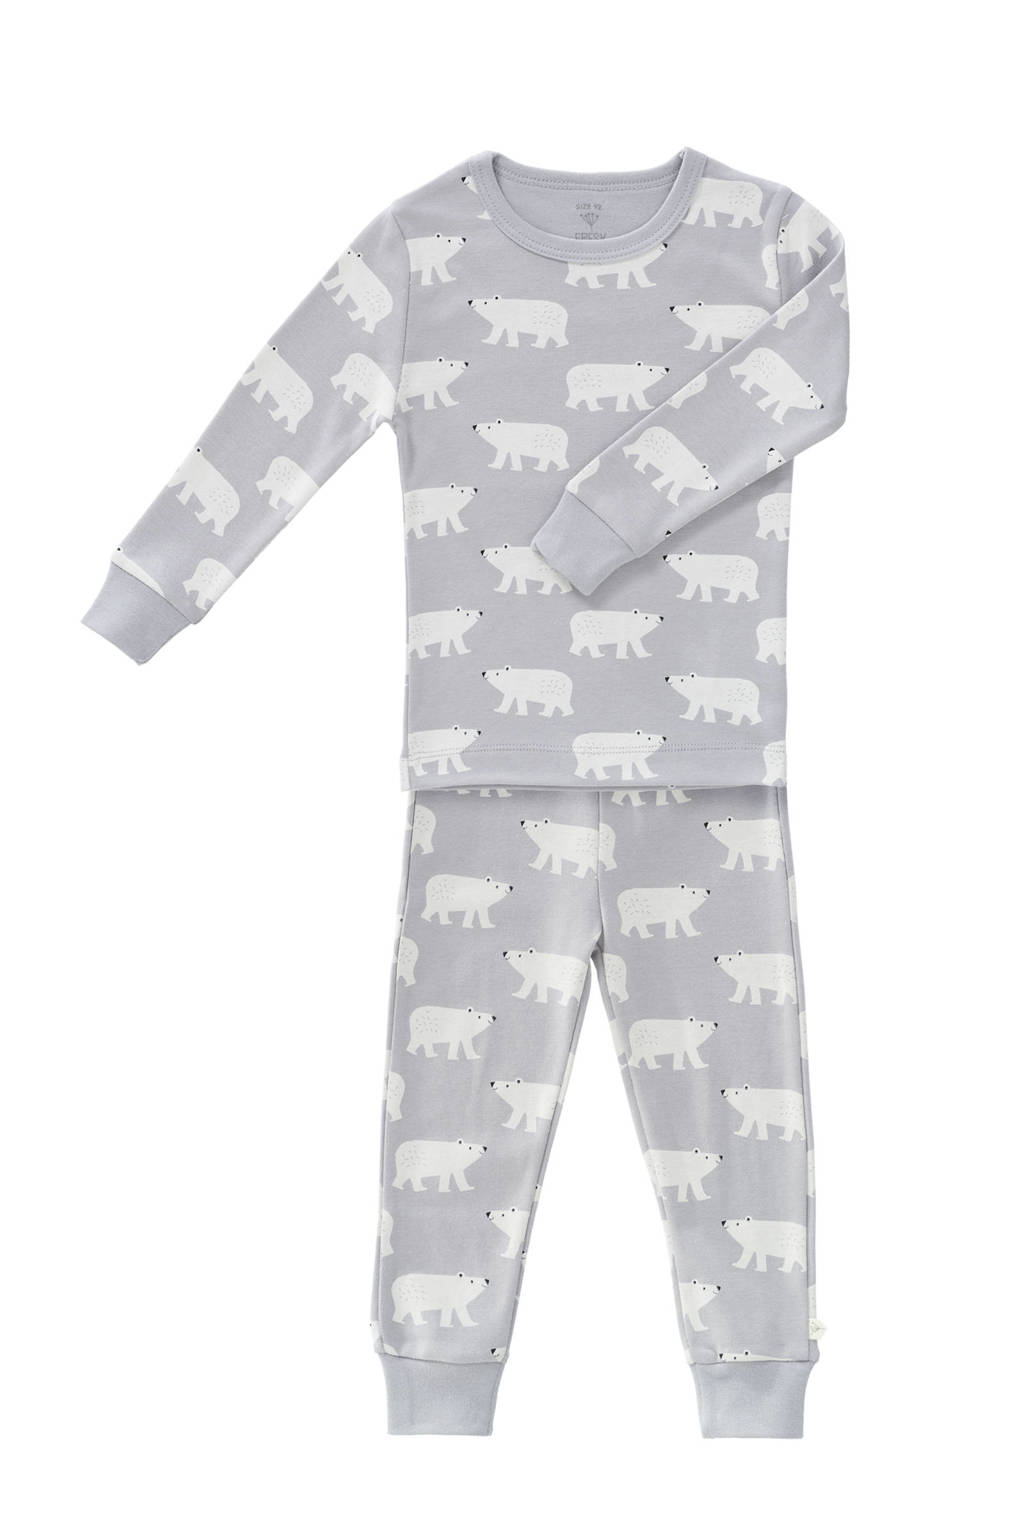 Fresk   pyjama Polar bear lichtgrijs, Lichtgrijs